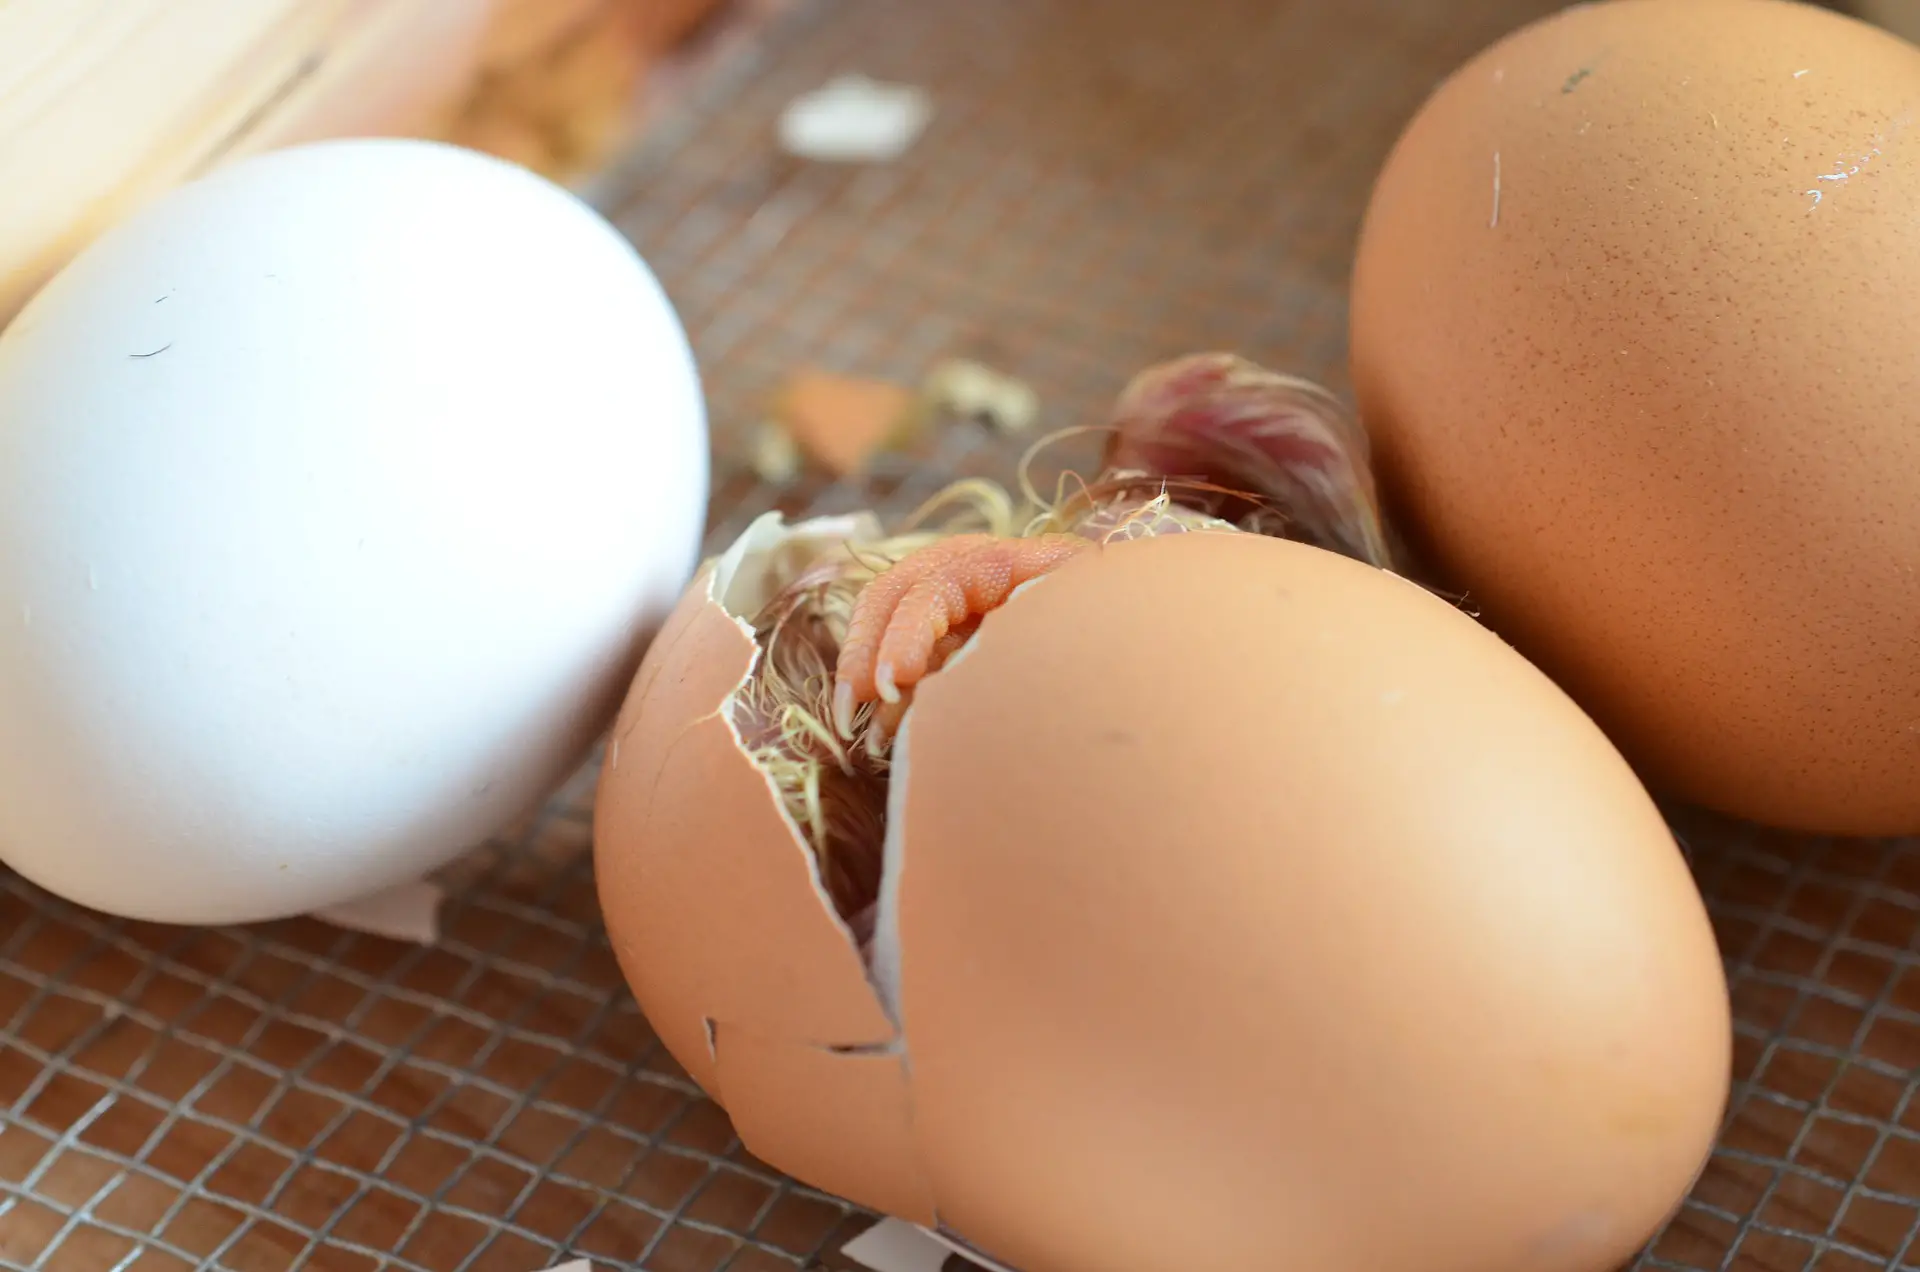 a hatching egg